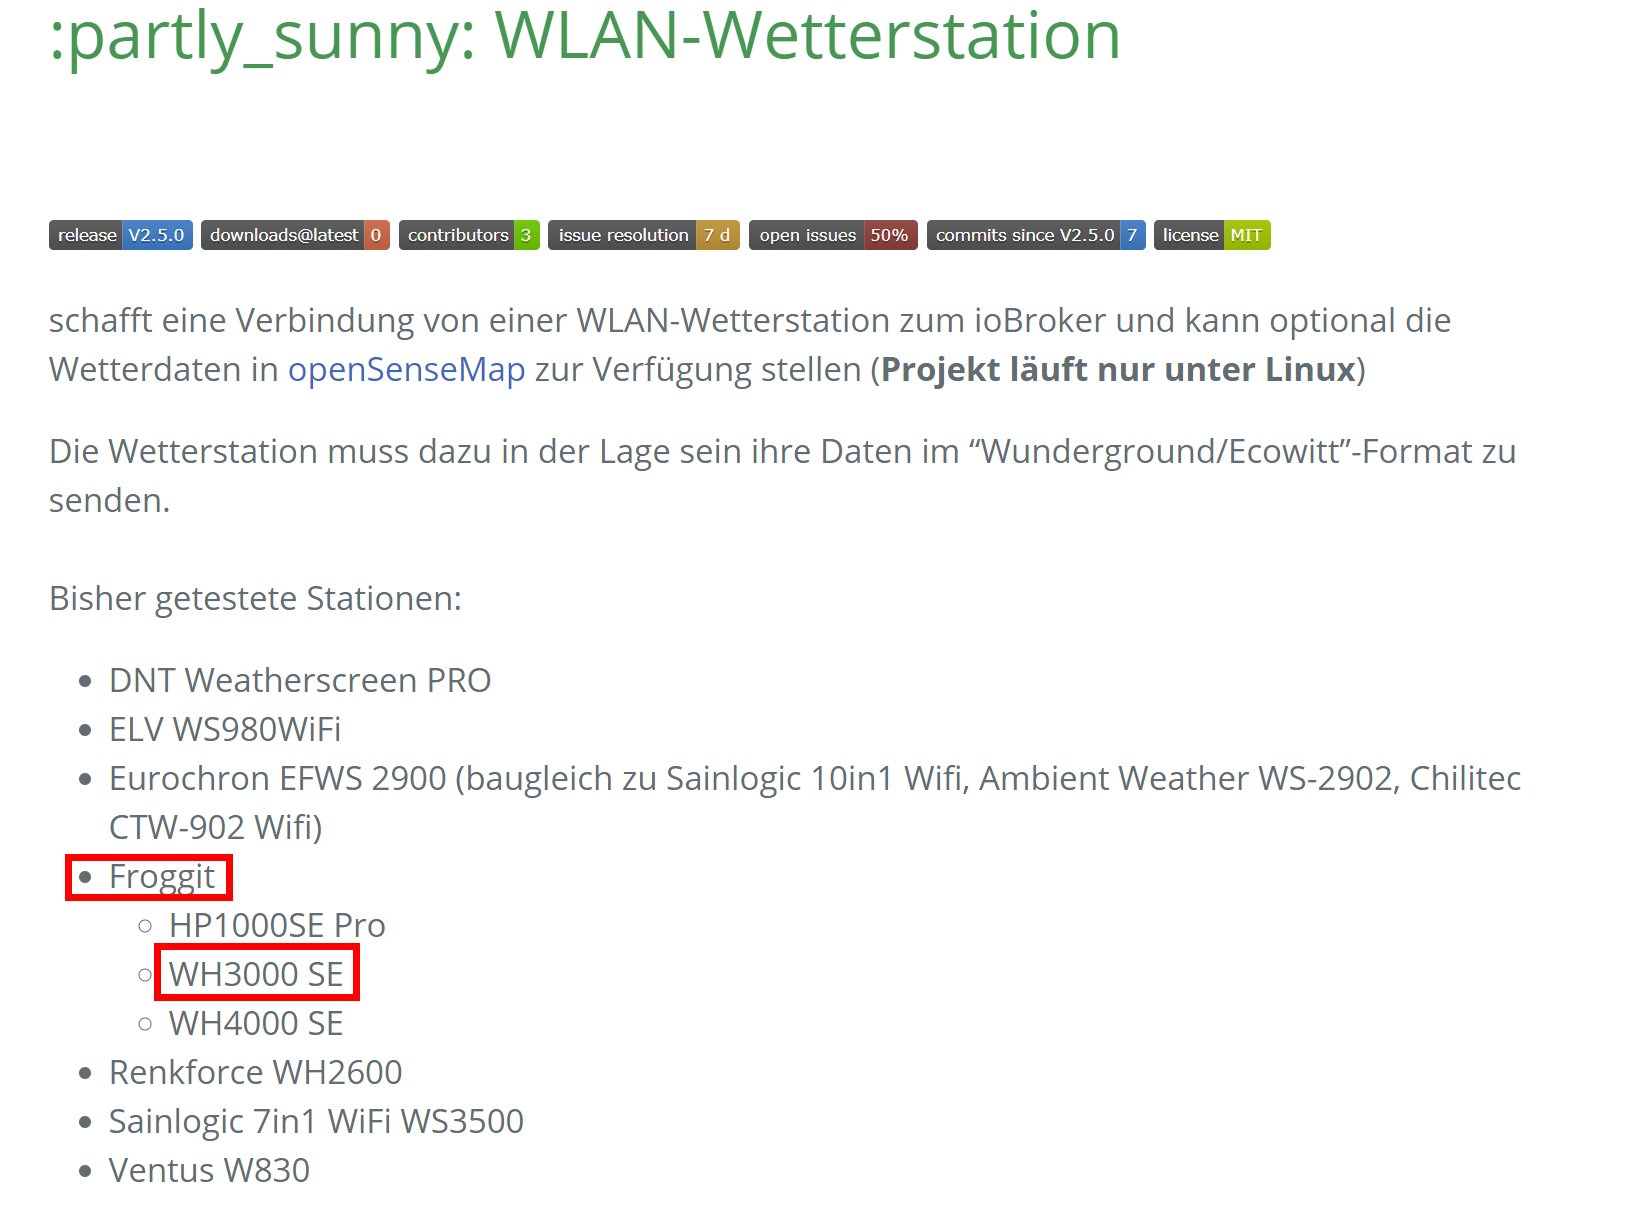 Screenshot - 2021-04-27 23_10_31-partly_sunny WLAN-Wetterstation _ WLAN-Wetterstation.png